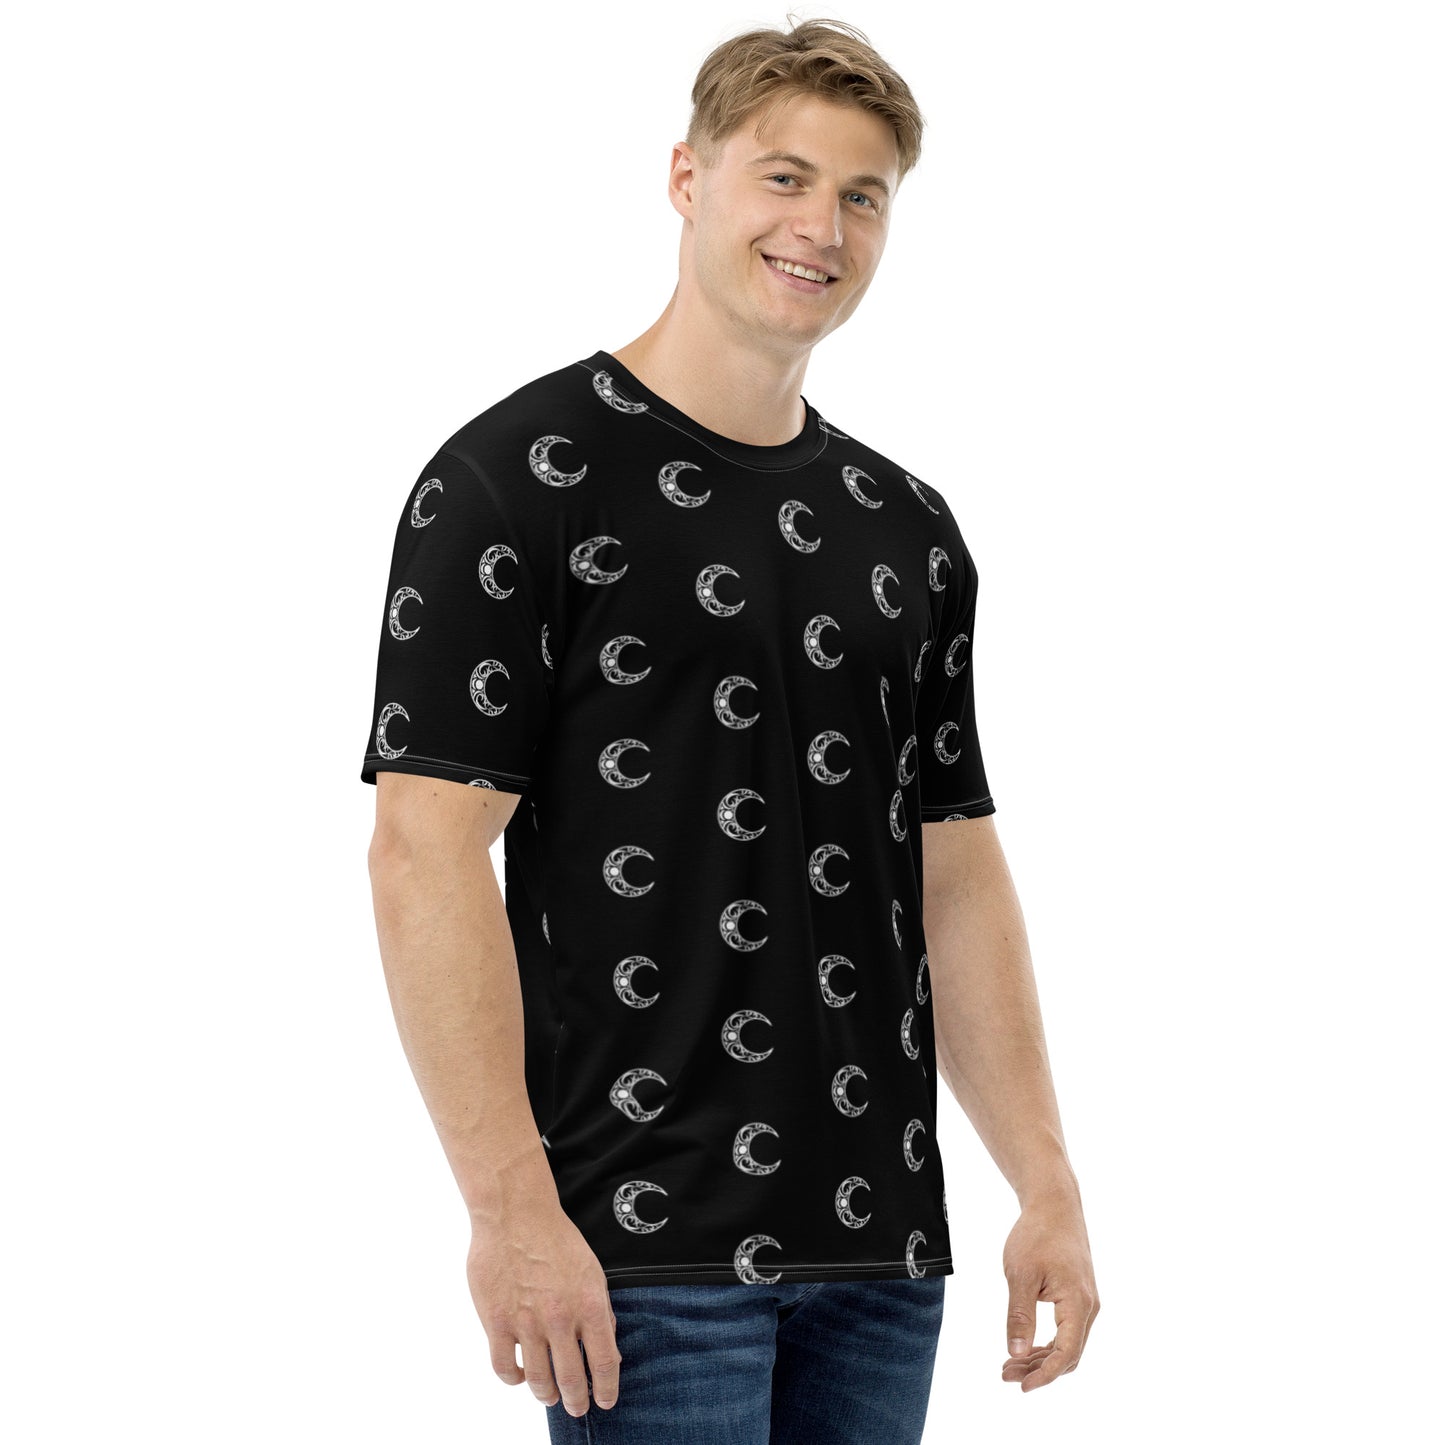 Damerian Elven Moon, Black Pattern - Men's T-shirt